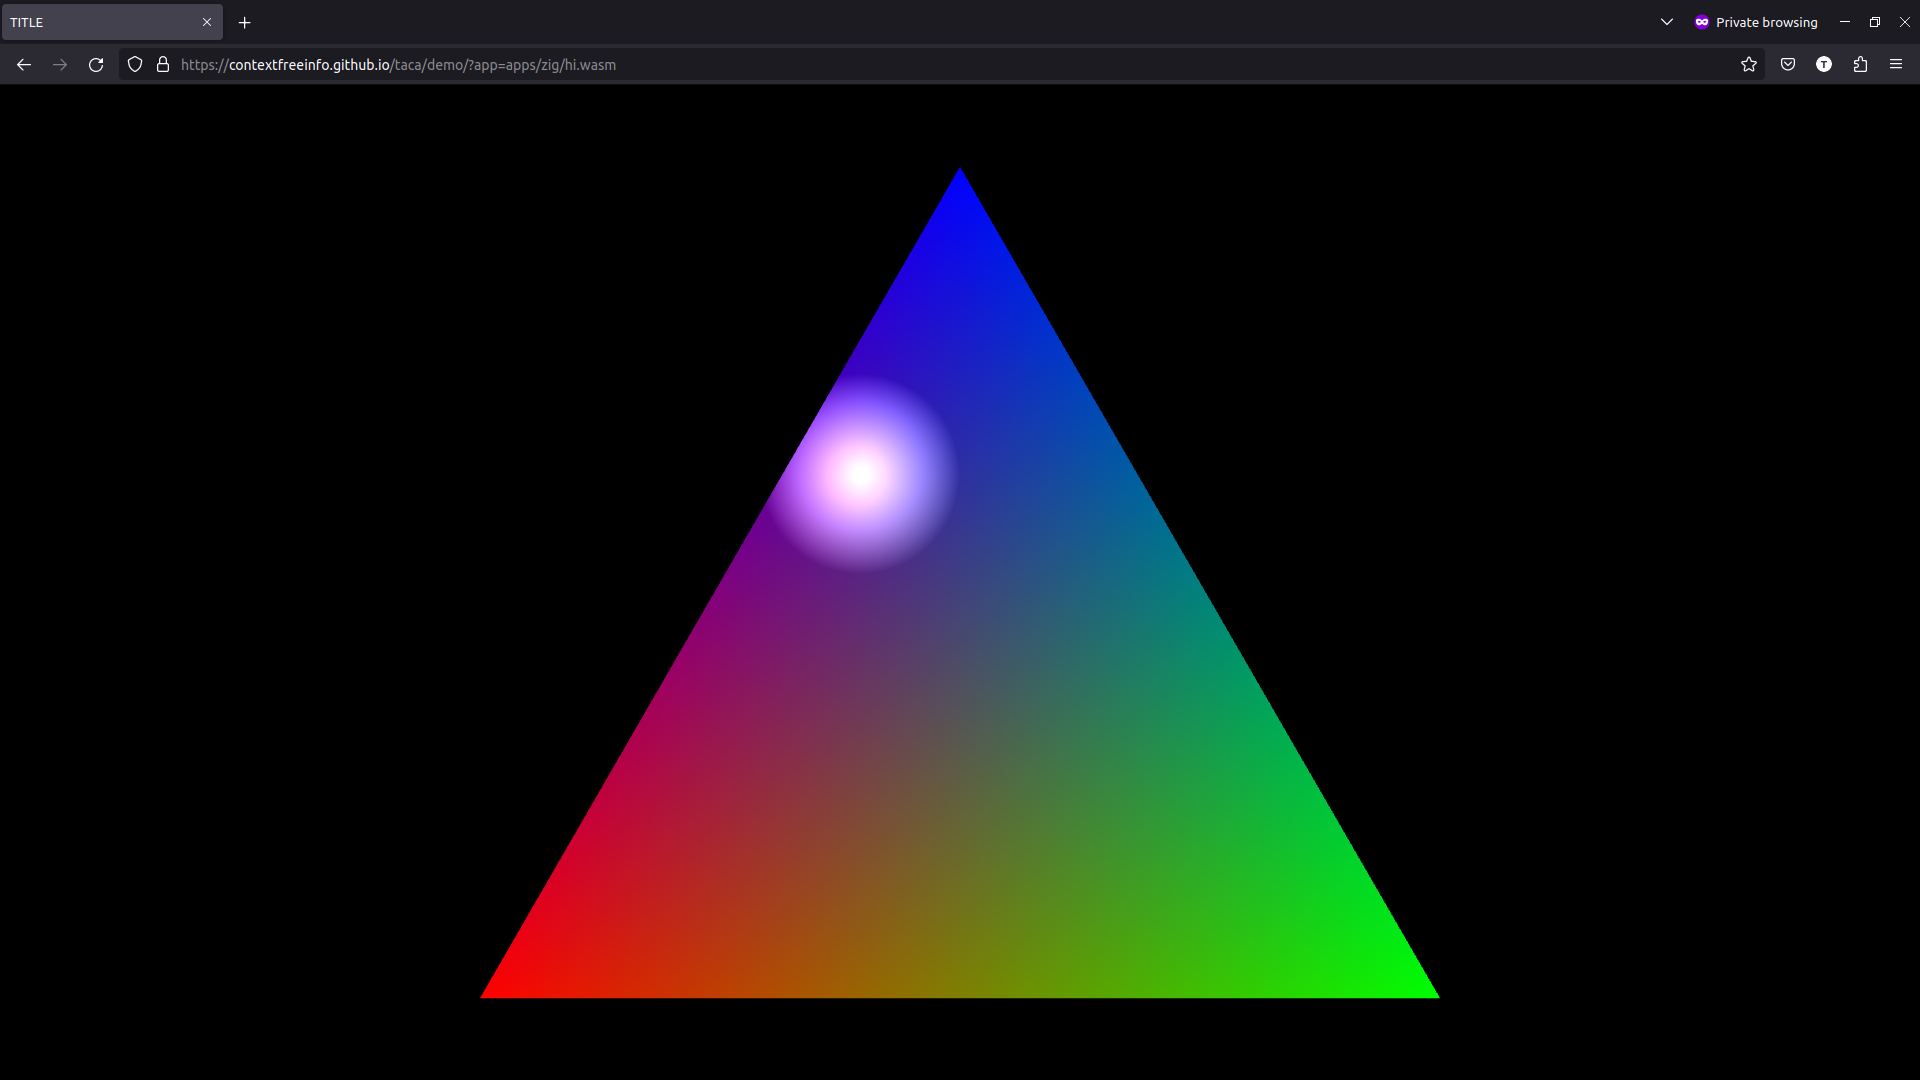 Taca demo app screenshot with colorful RGB triangle and white spotlight